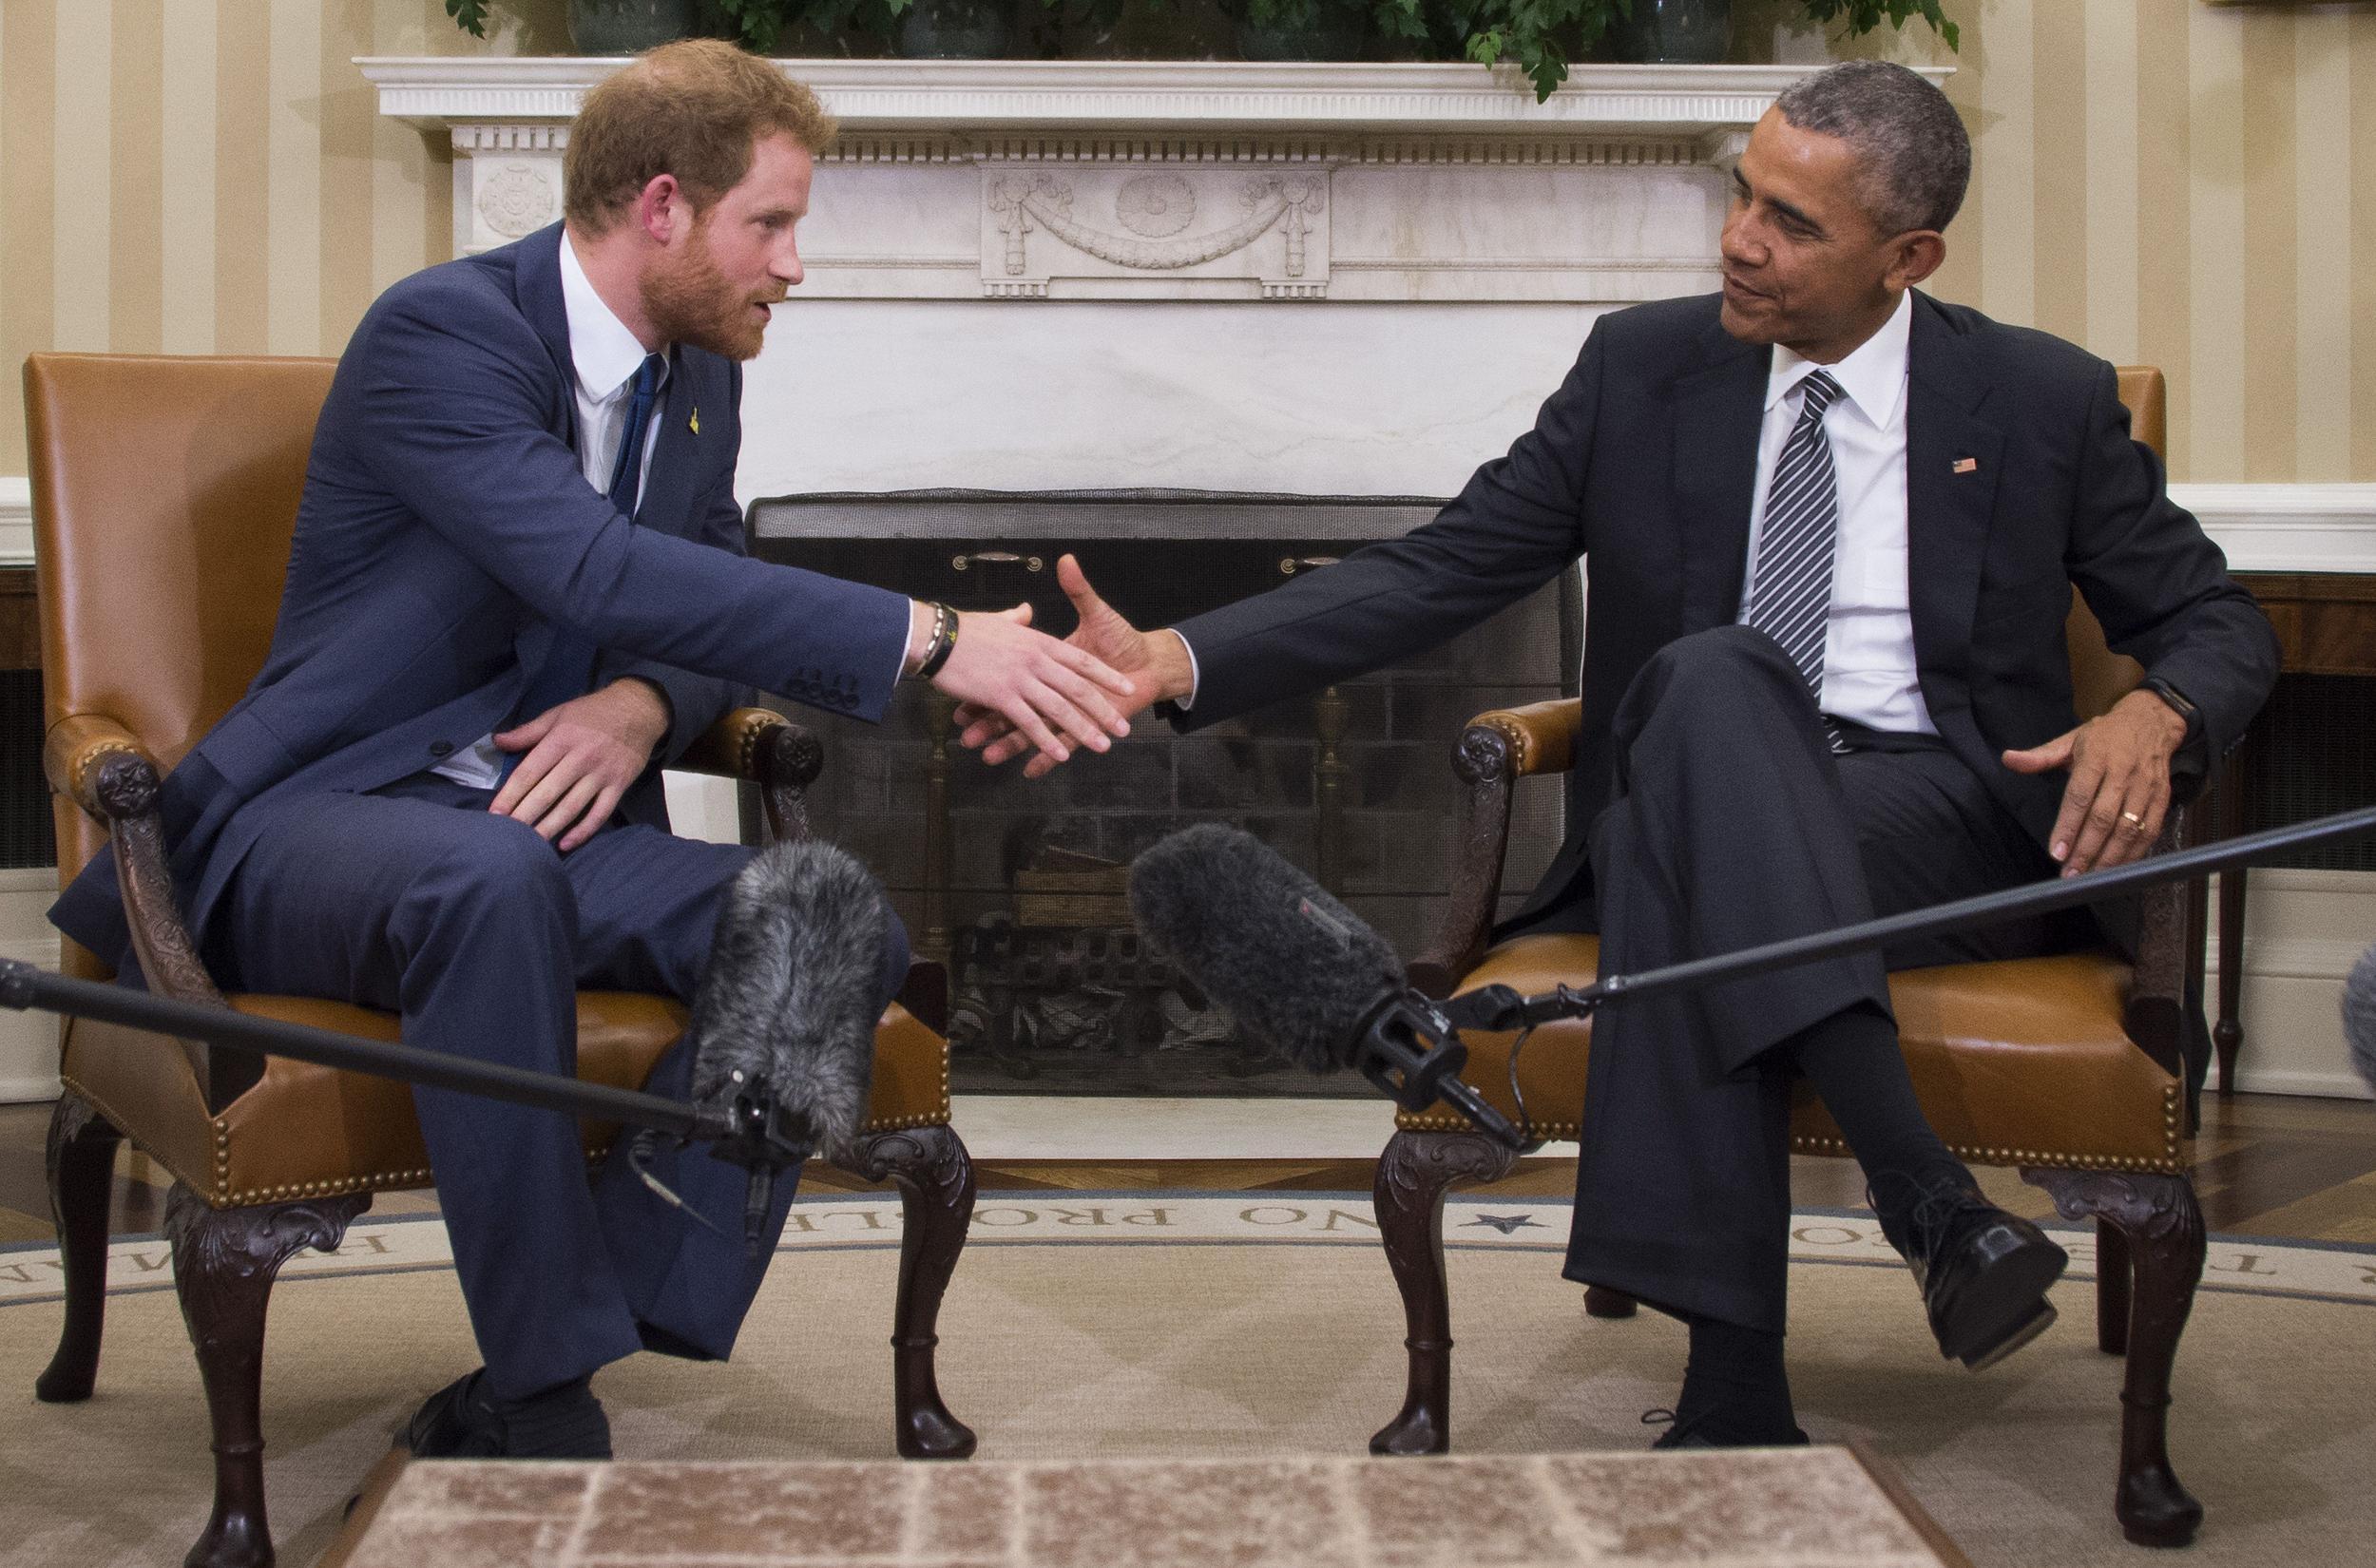 Prince Harry and Barack Obama